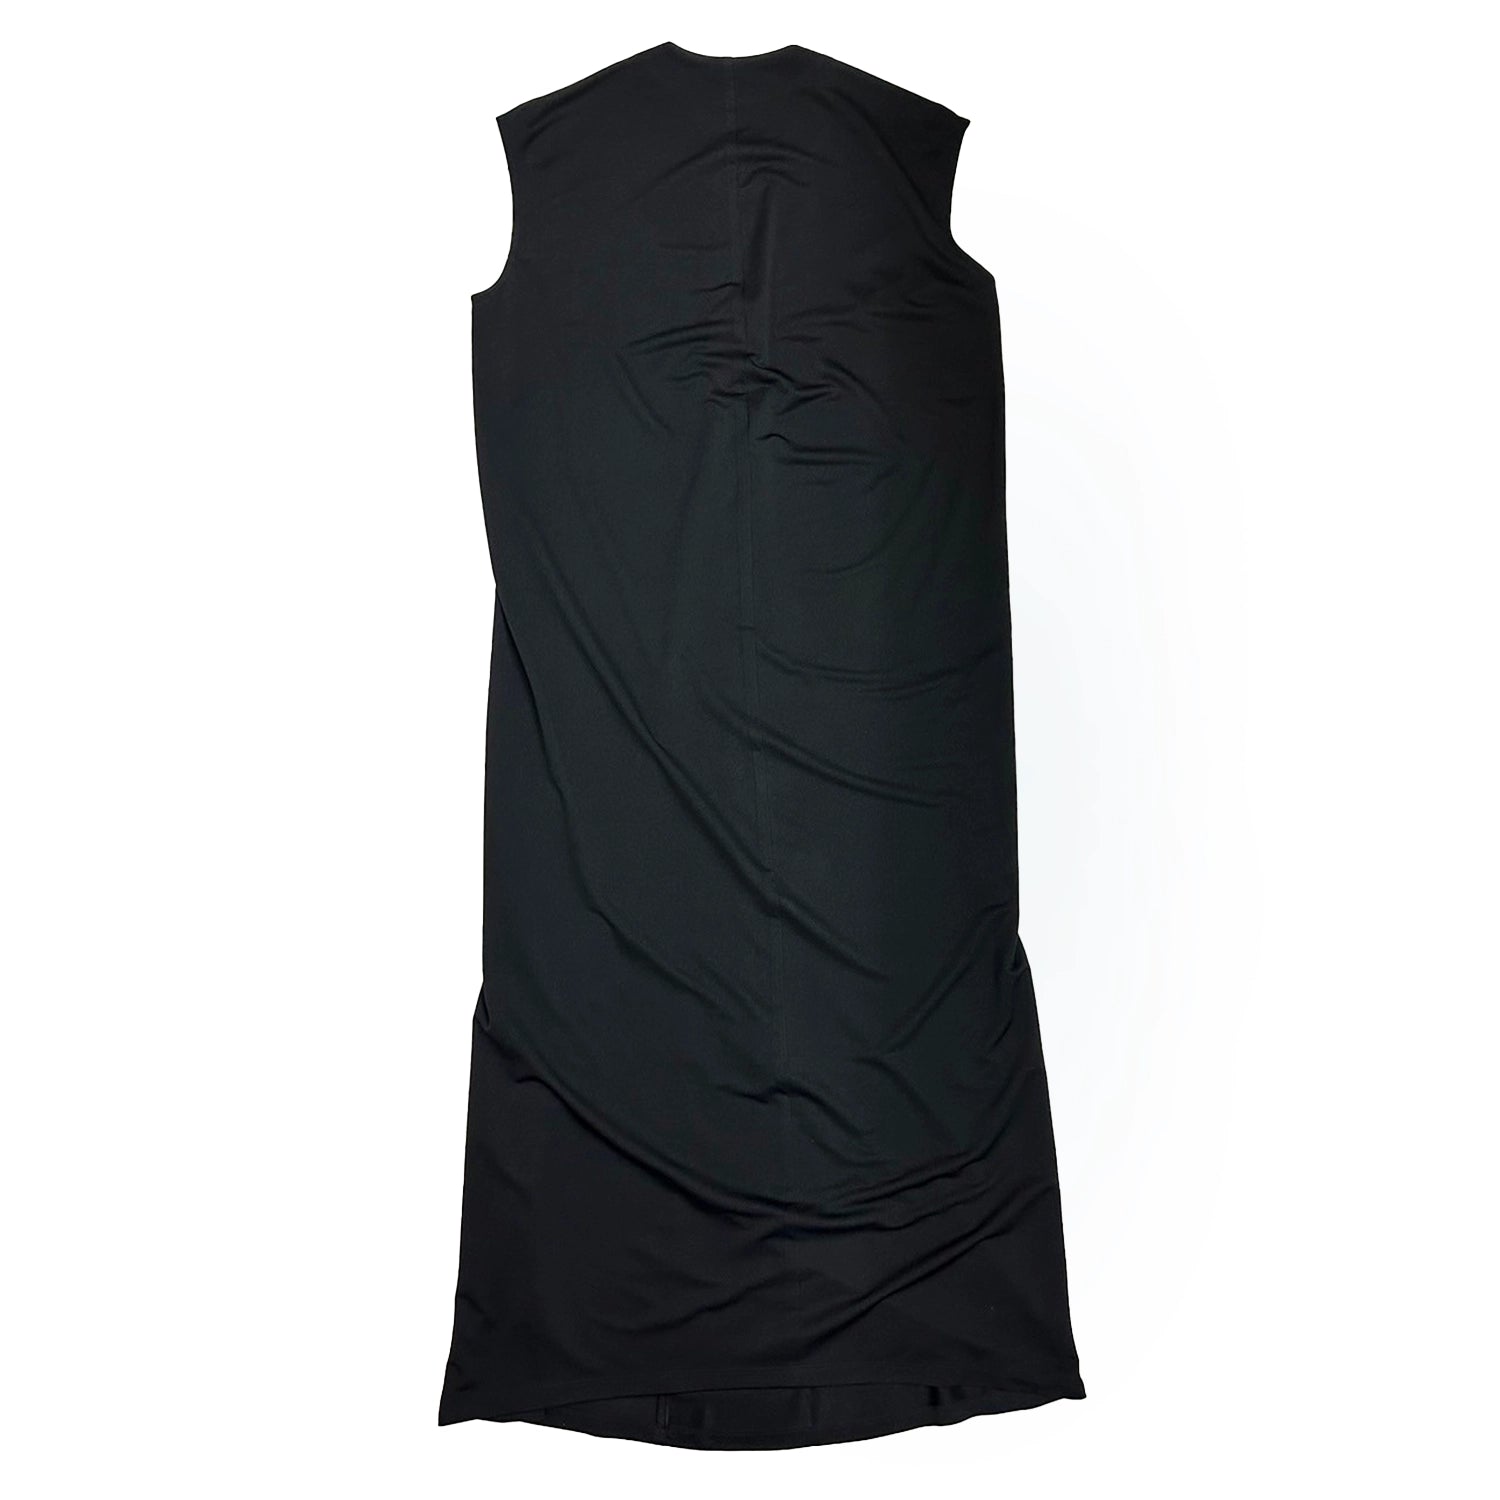 08sircus / Cupro jersey v-neck sleeveless dress